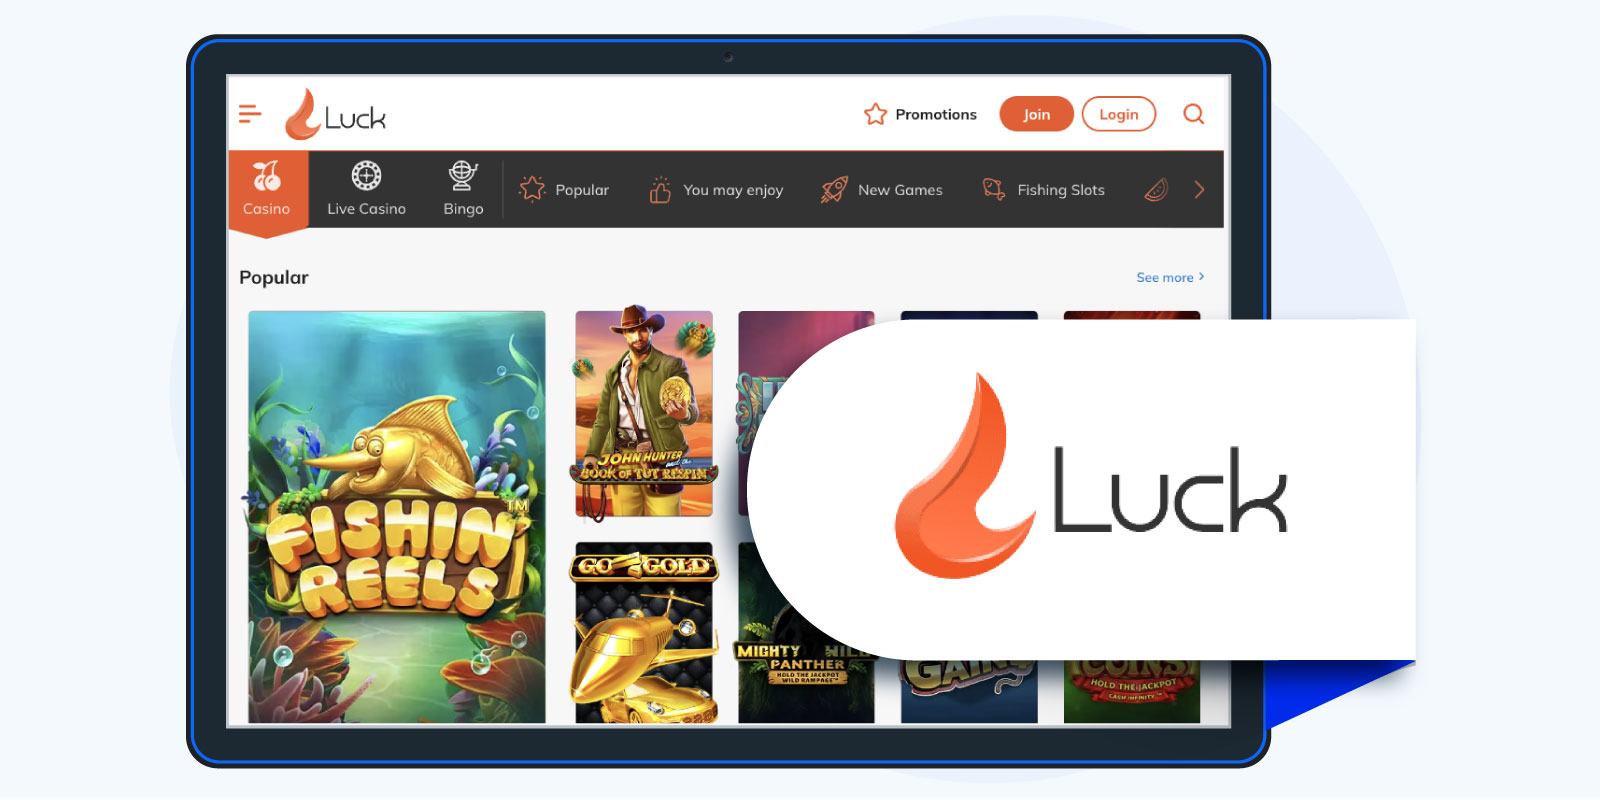 Luck.com – 100 free spins no deposit on card registration